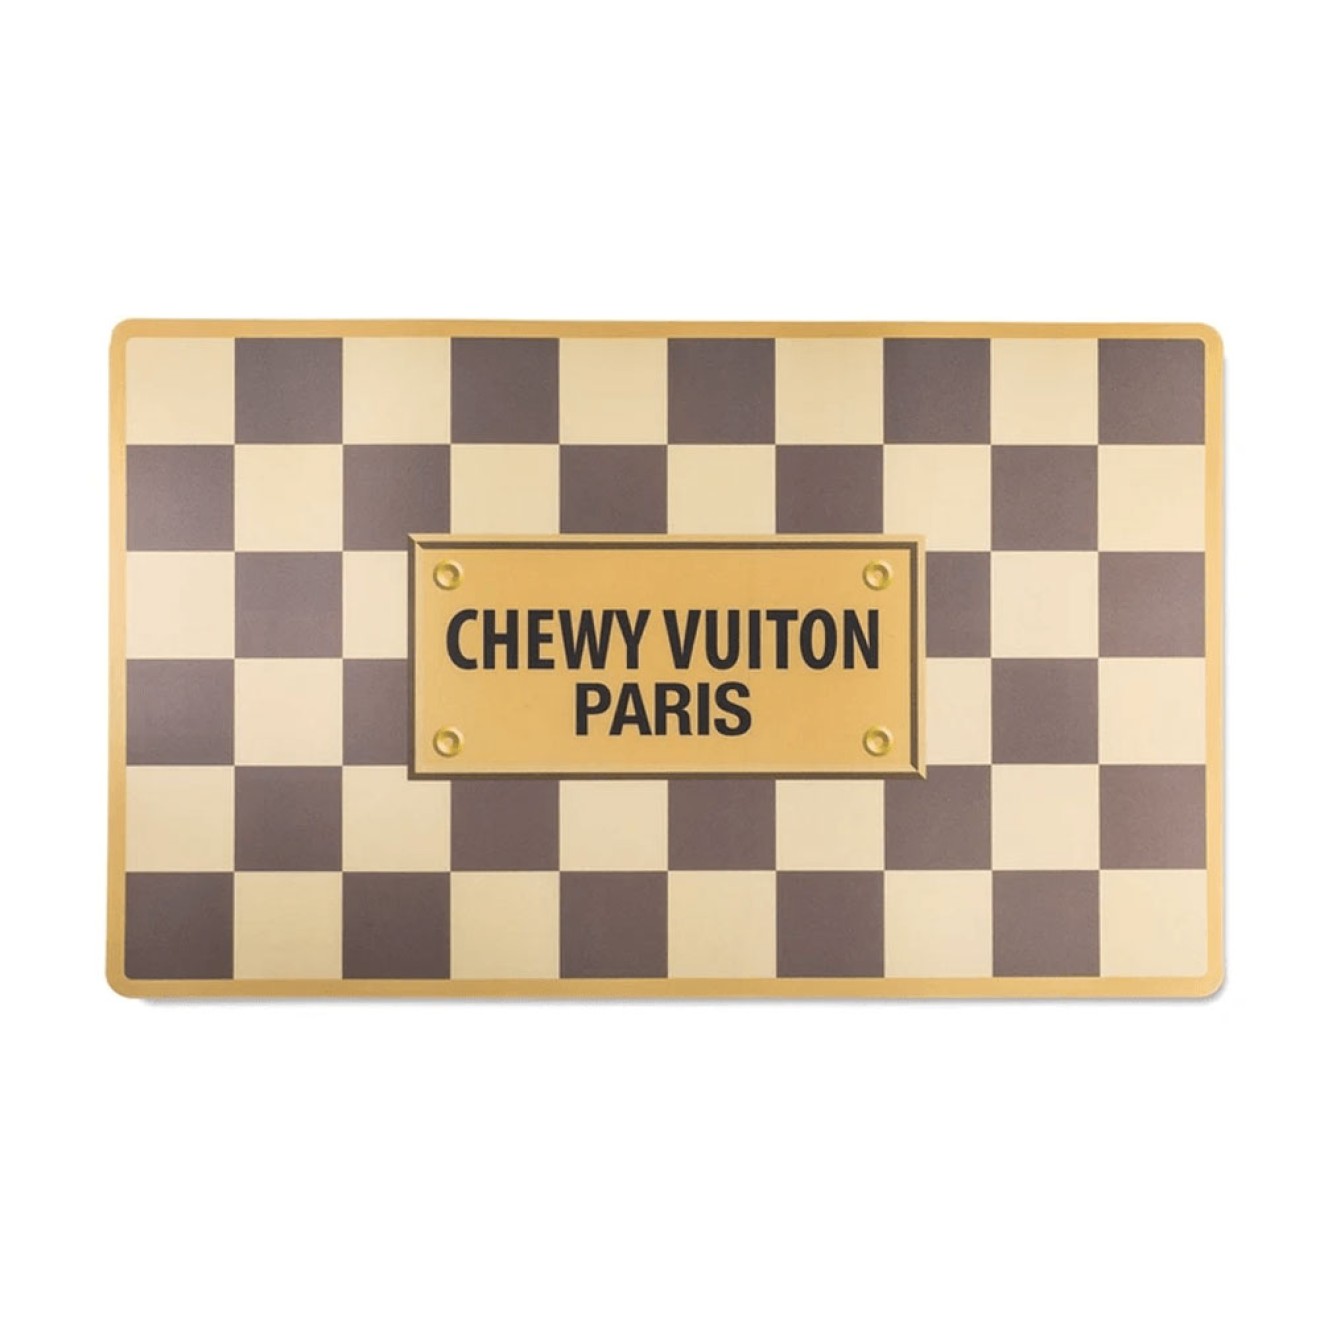 Napfunterlage Checker Chewy Vuiton